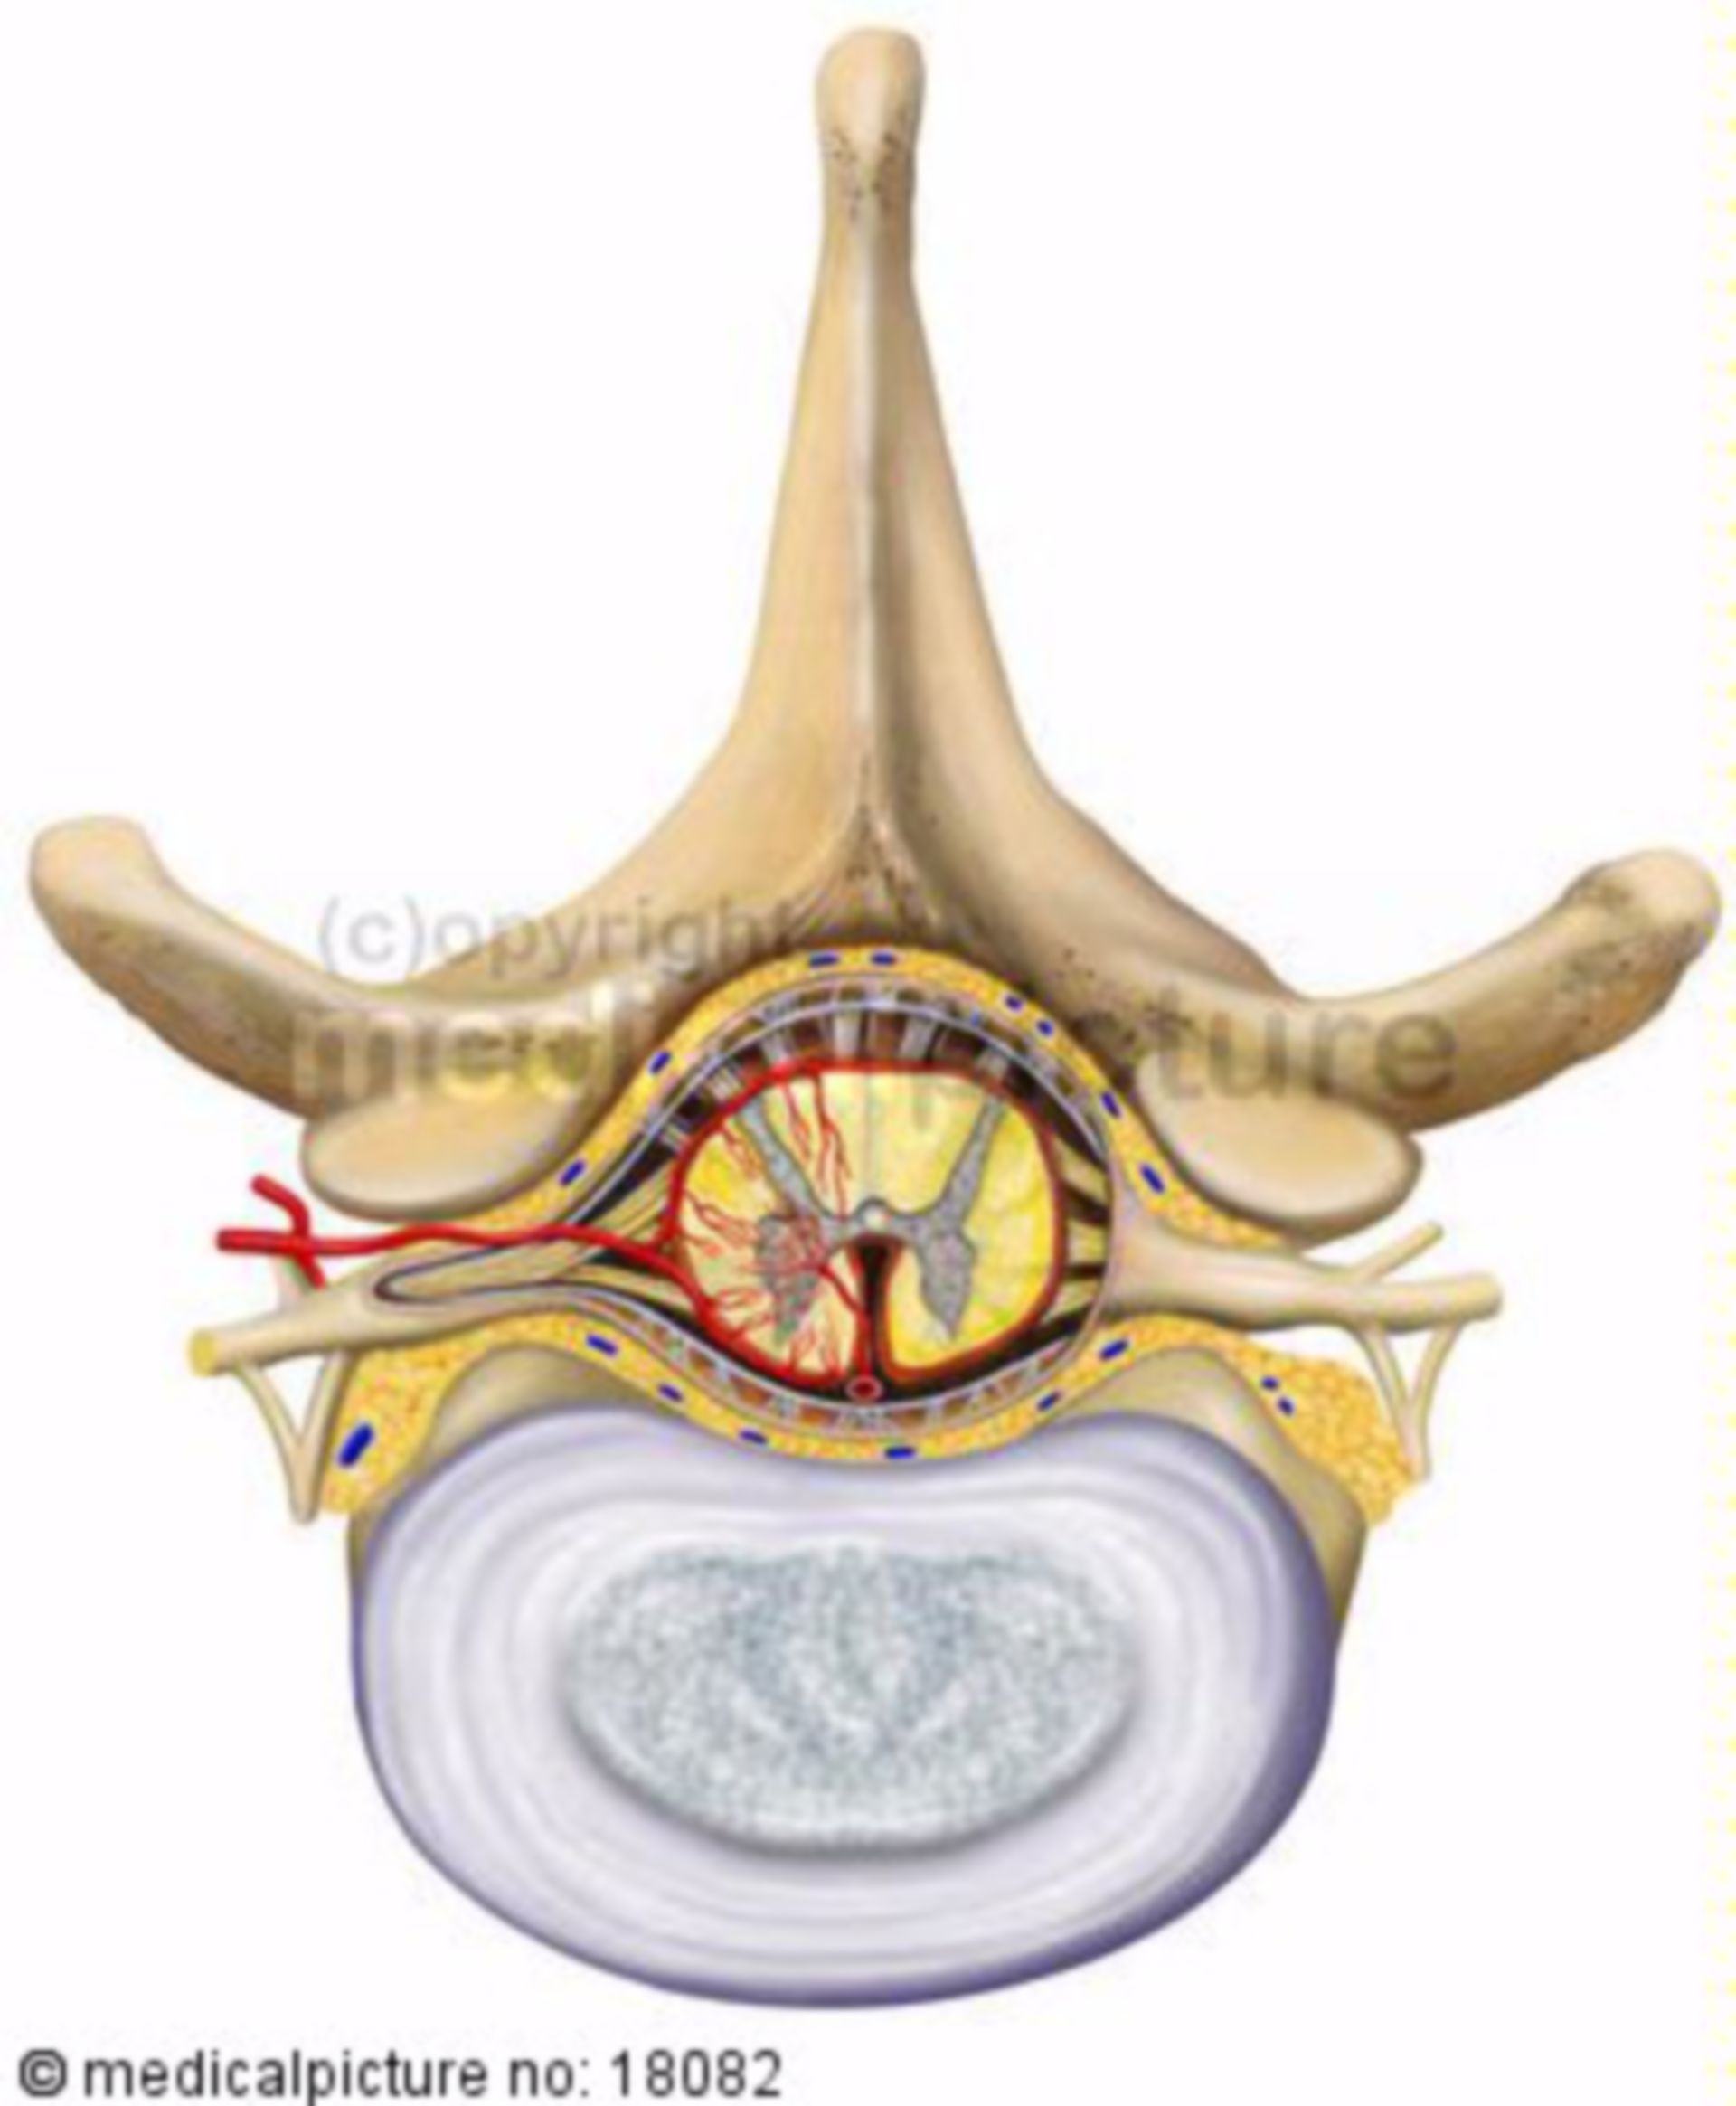 Vertebral segment with intervertebral disc